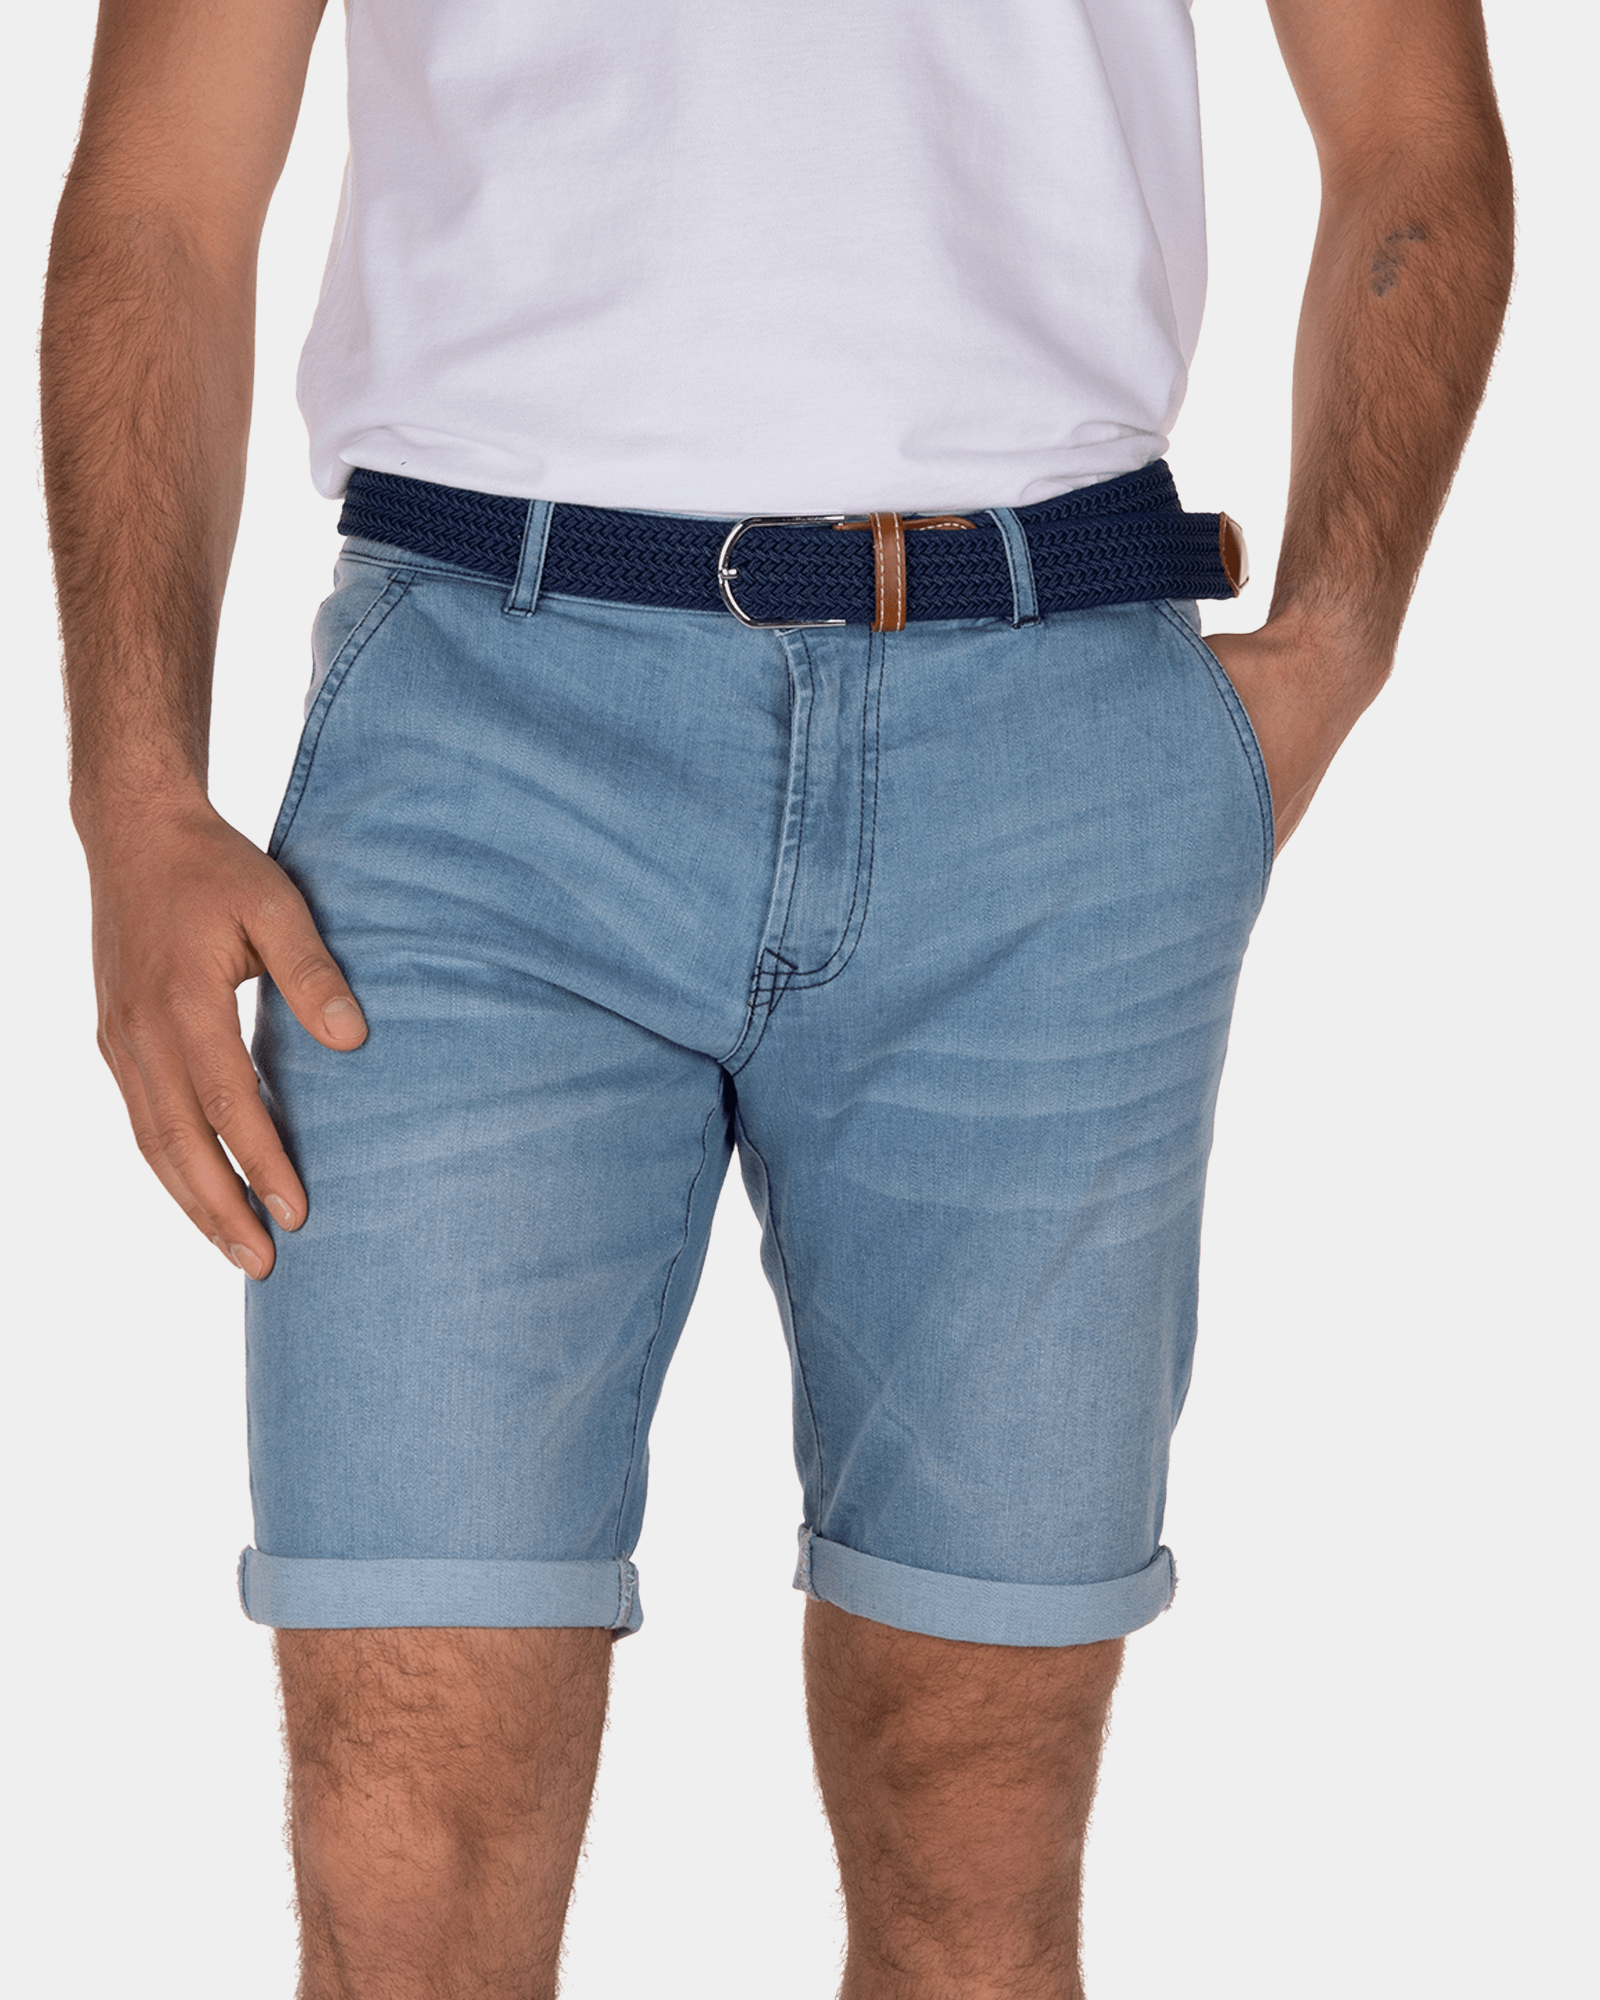 jeans Zealand Stone | shorts Dunedine New - NZA Light Auckland